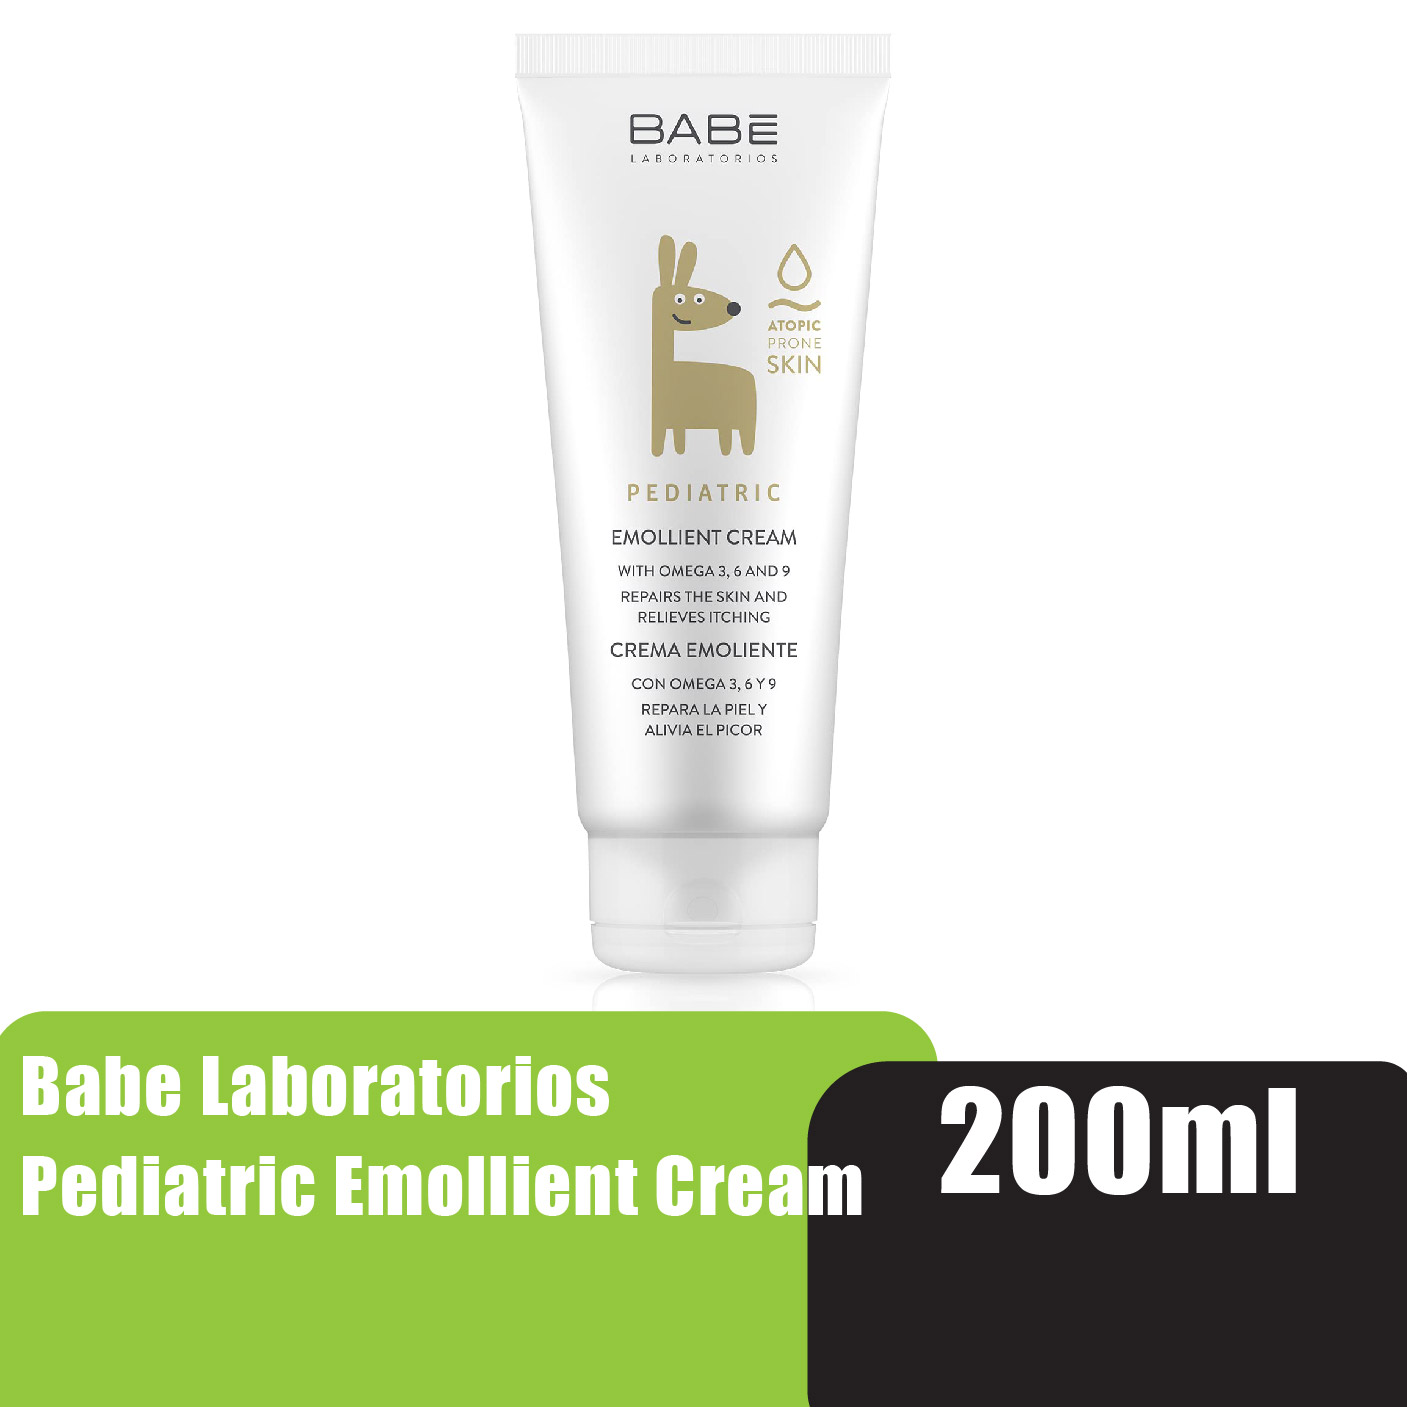 BABE LABORATORIOS Pediatric Emollient Cream 200ml with Omega 3, 6 & 9 - Itching Cream & Repair Skin (for Baby & Kids)